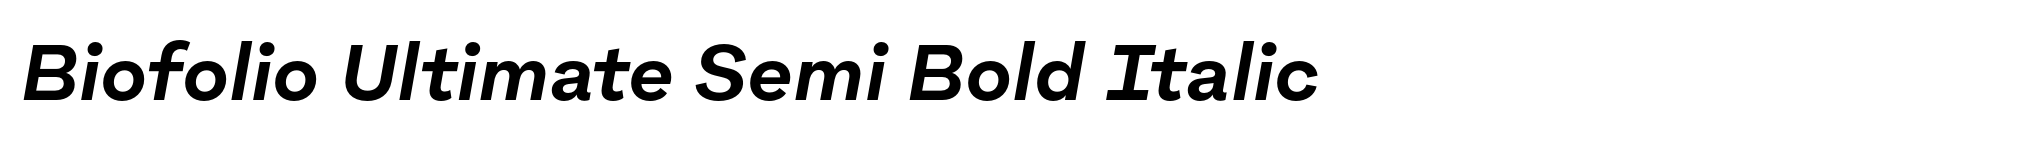 Biofolio Ultimate Semi Bold Italic image